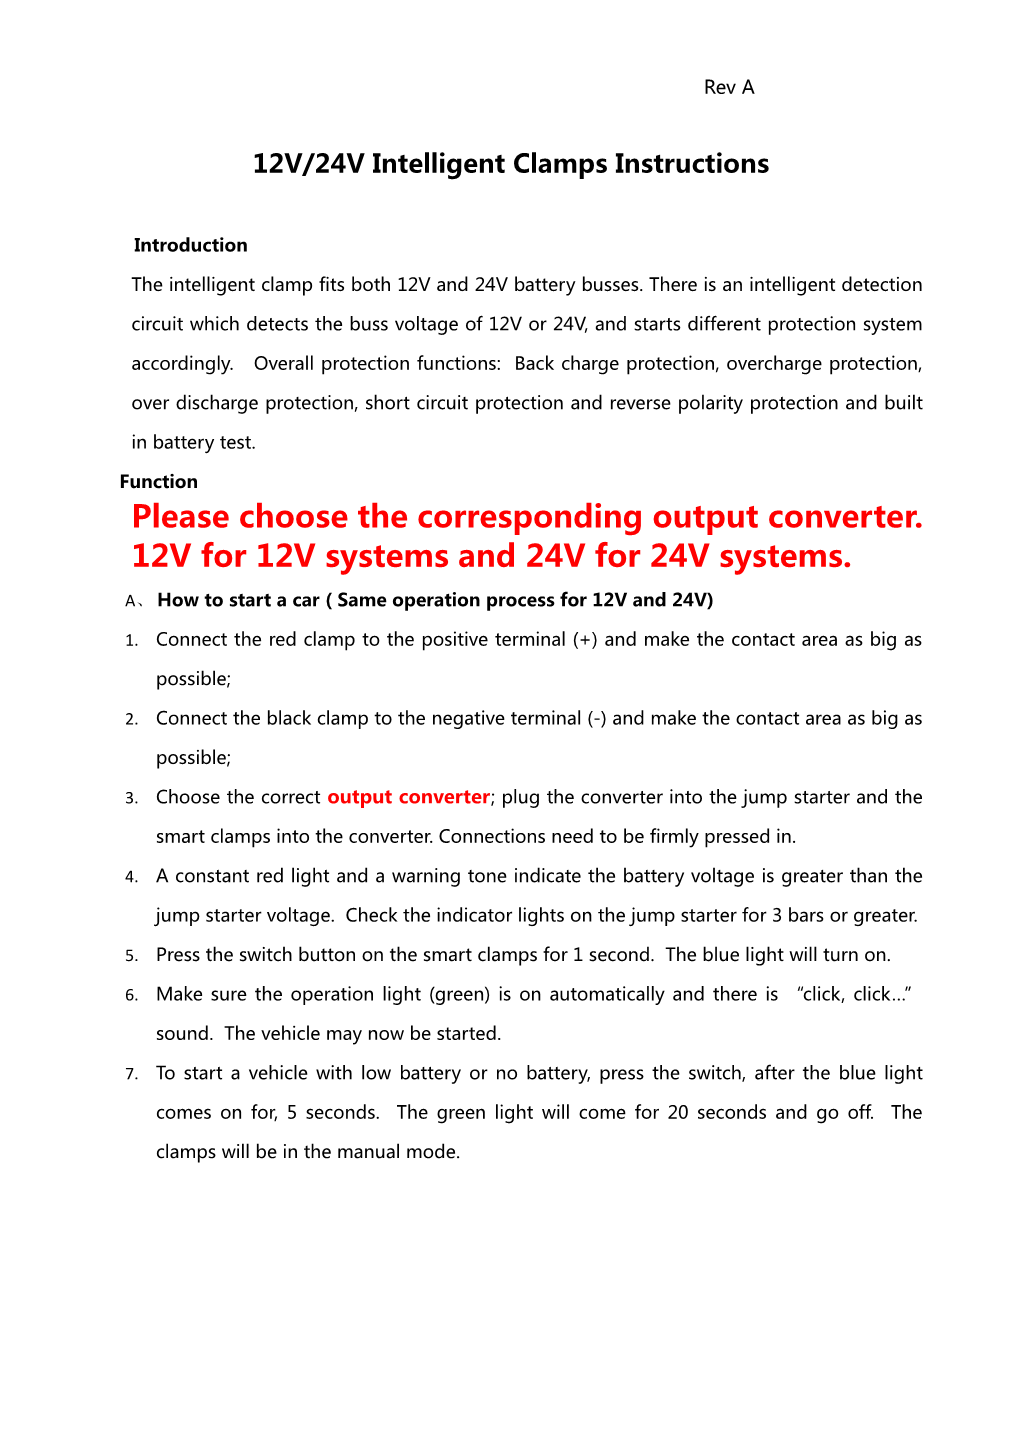 12V/24V Intelligent Clamps Instructions